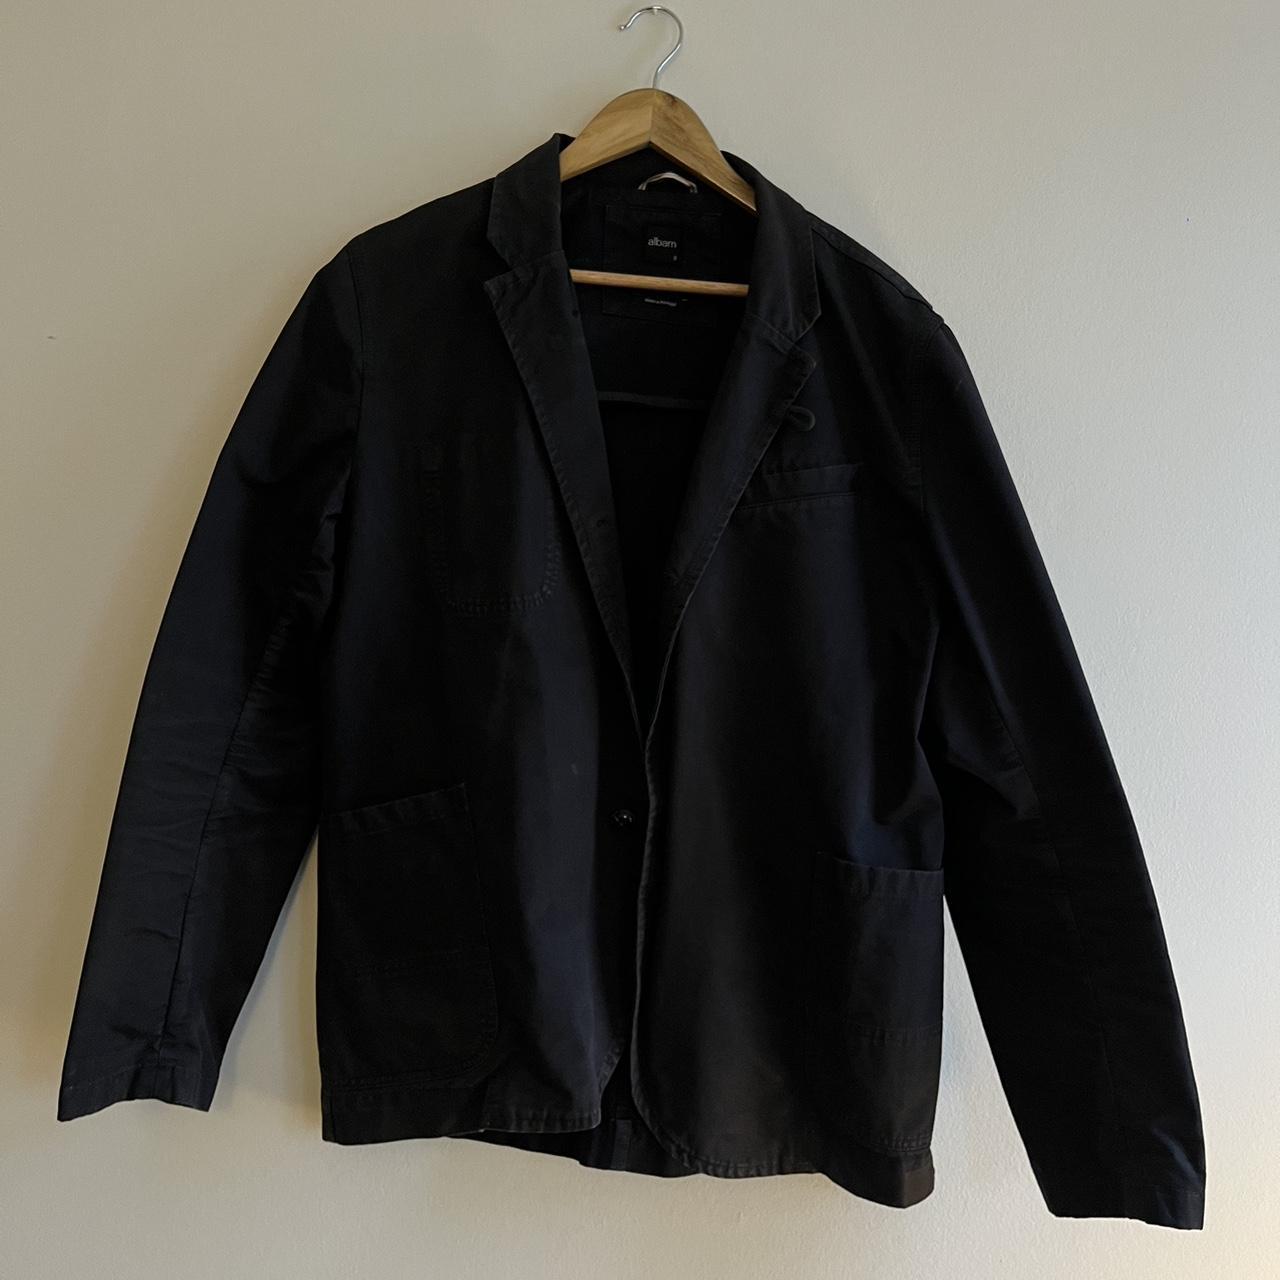 Albam jacket Smart casual Regular fit Made in... - Depop